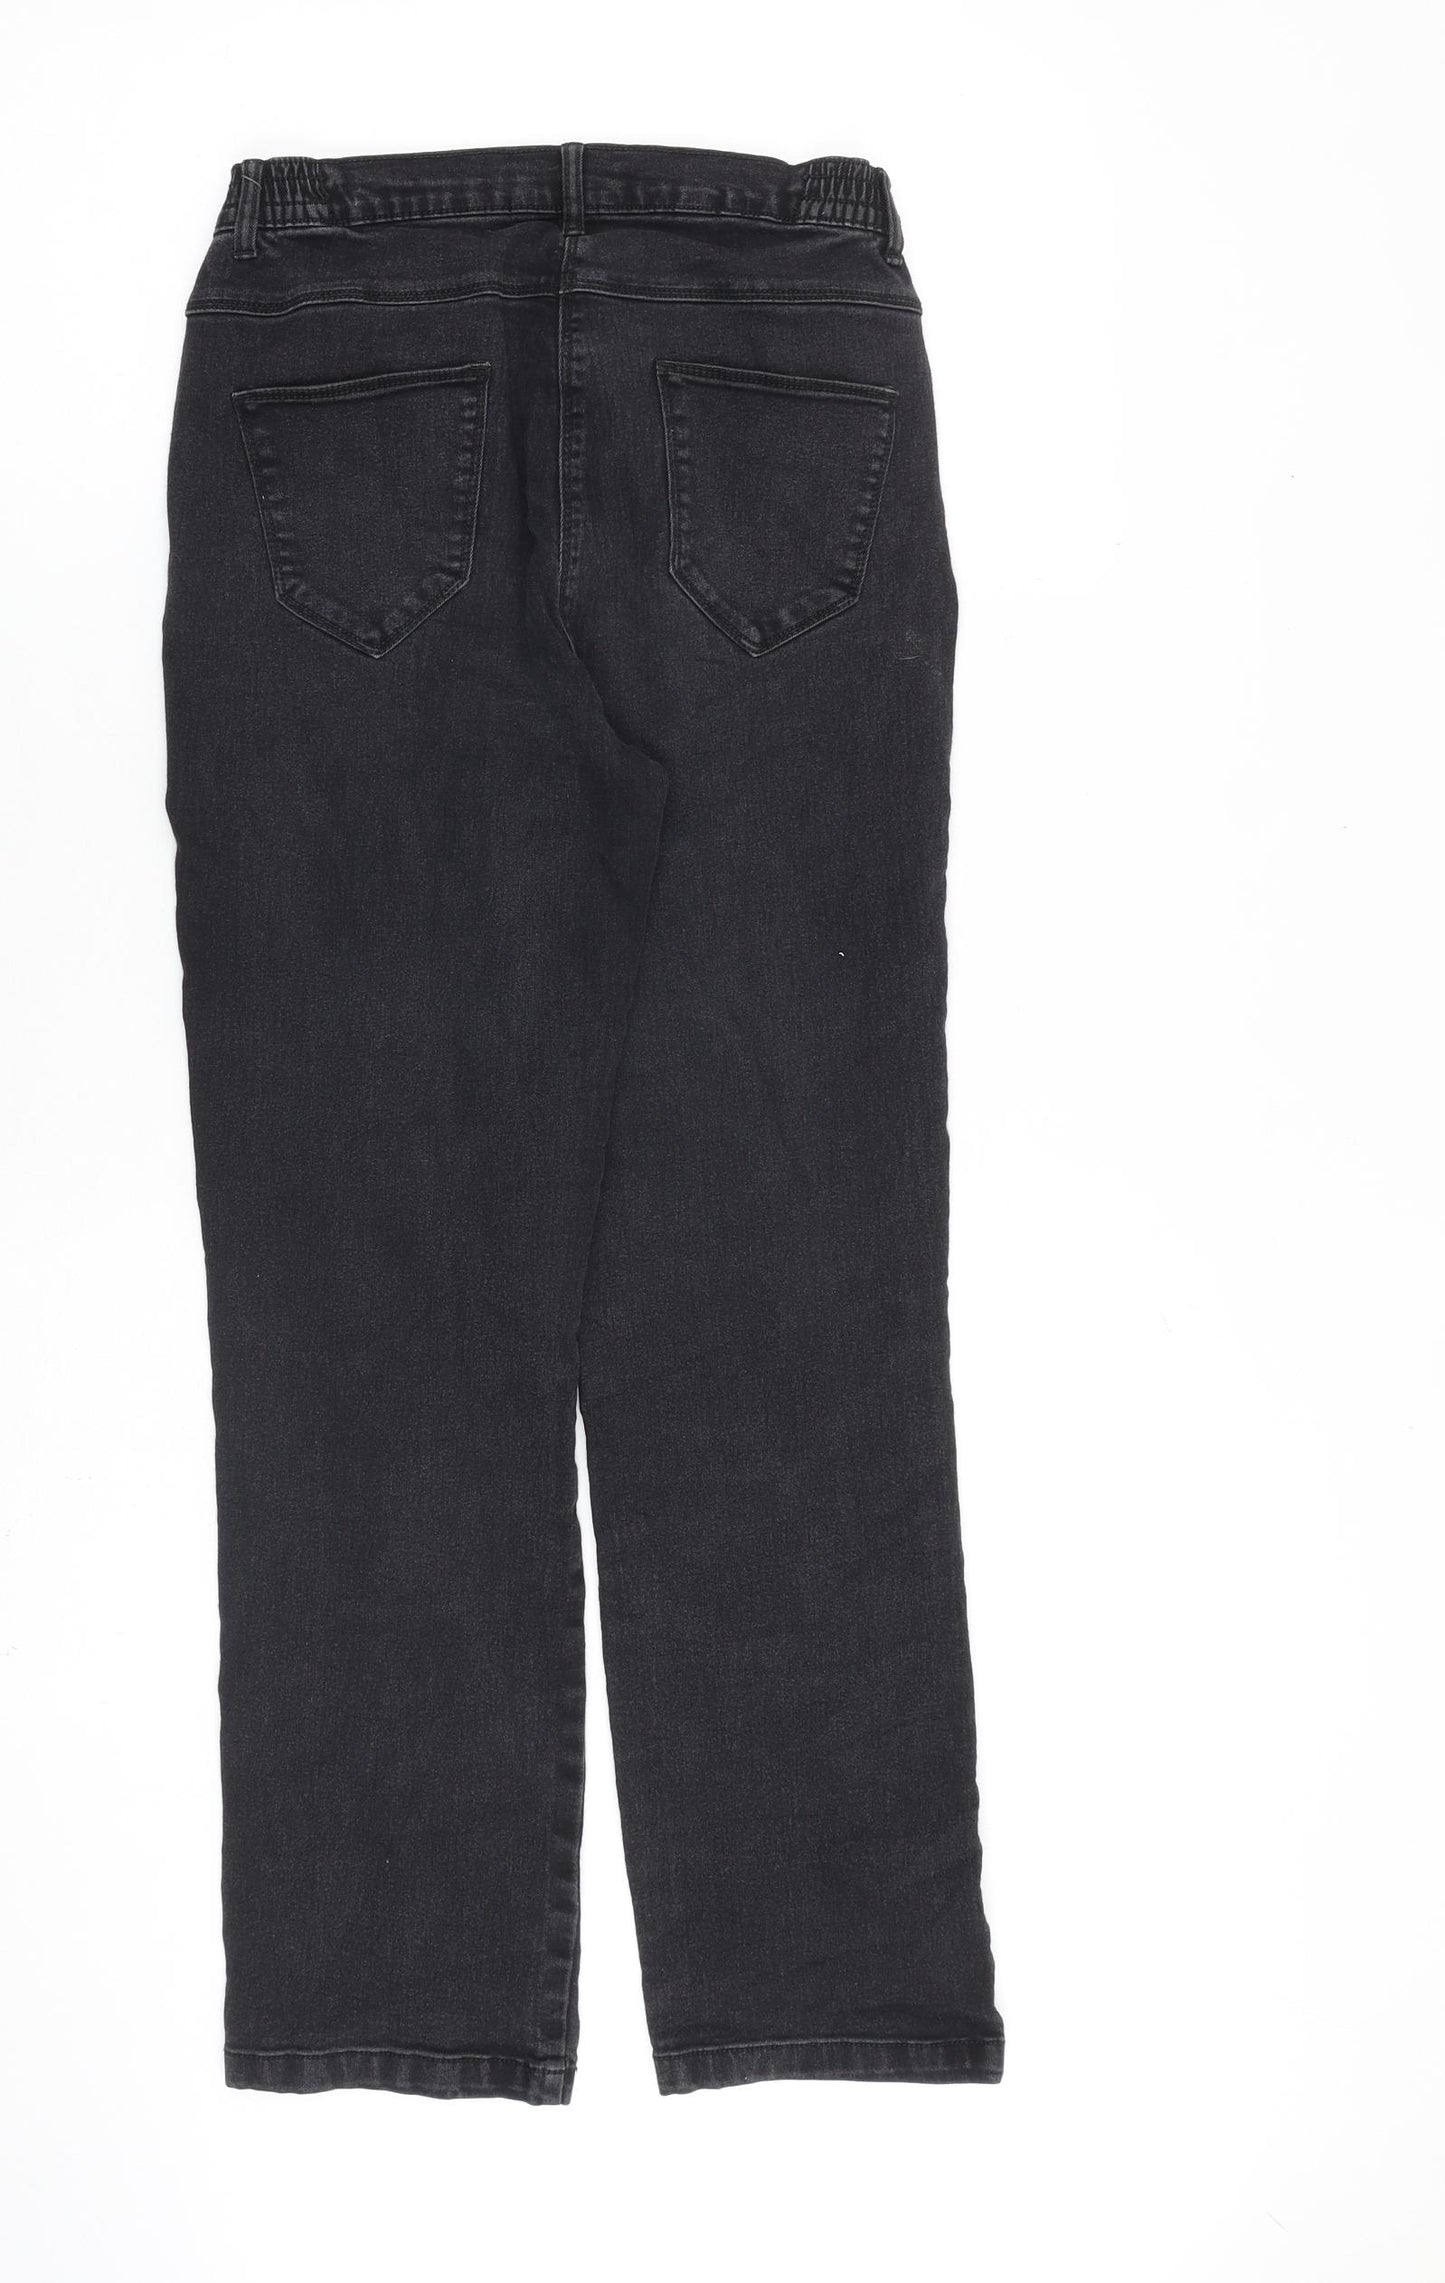 Bonmarché Womens Black Cotton Straight Jeans Size 10 L28 in Regular Zip